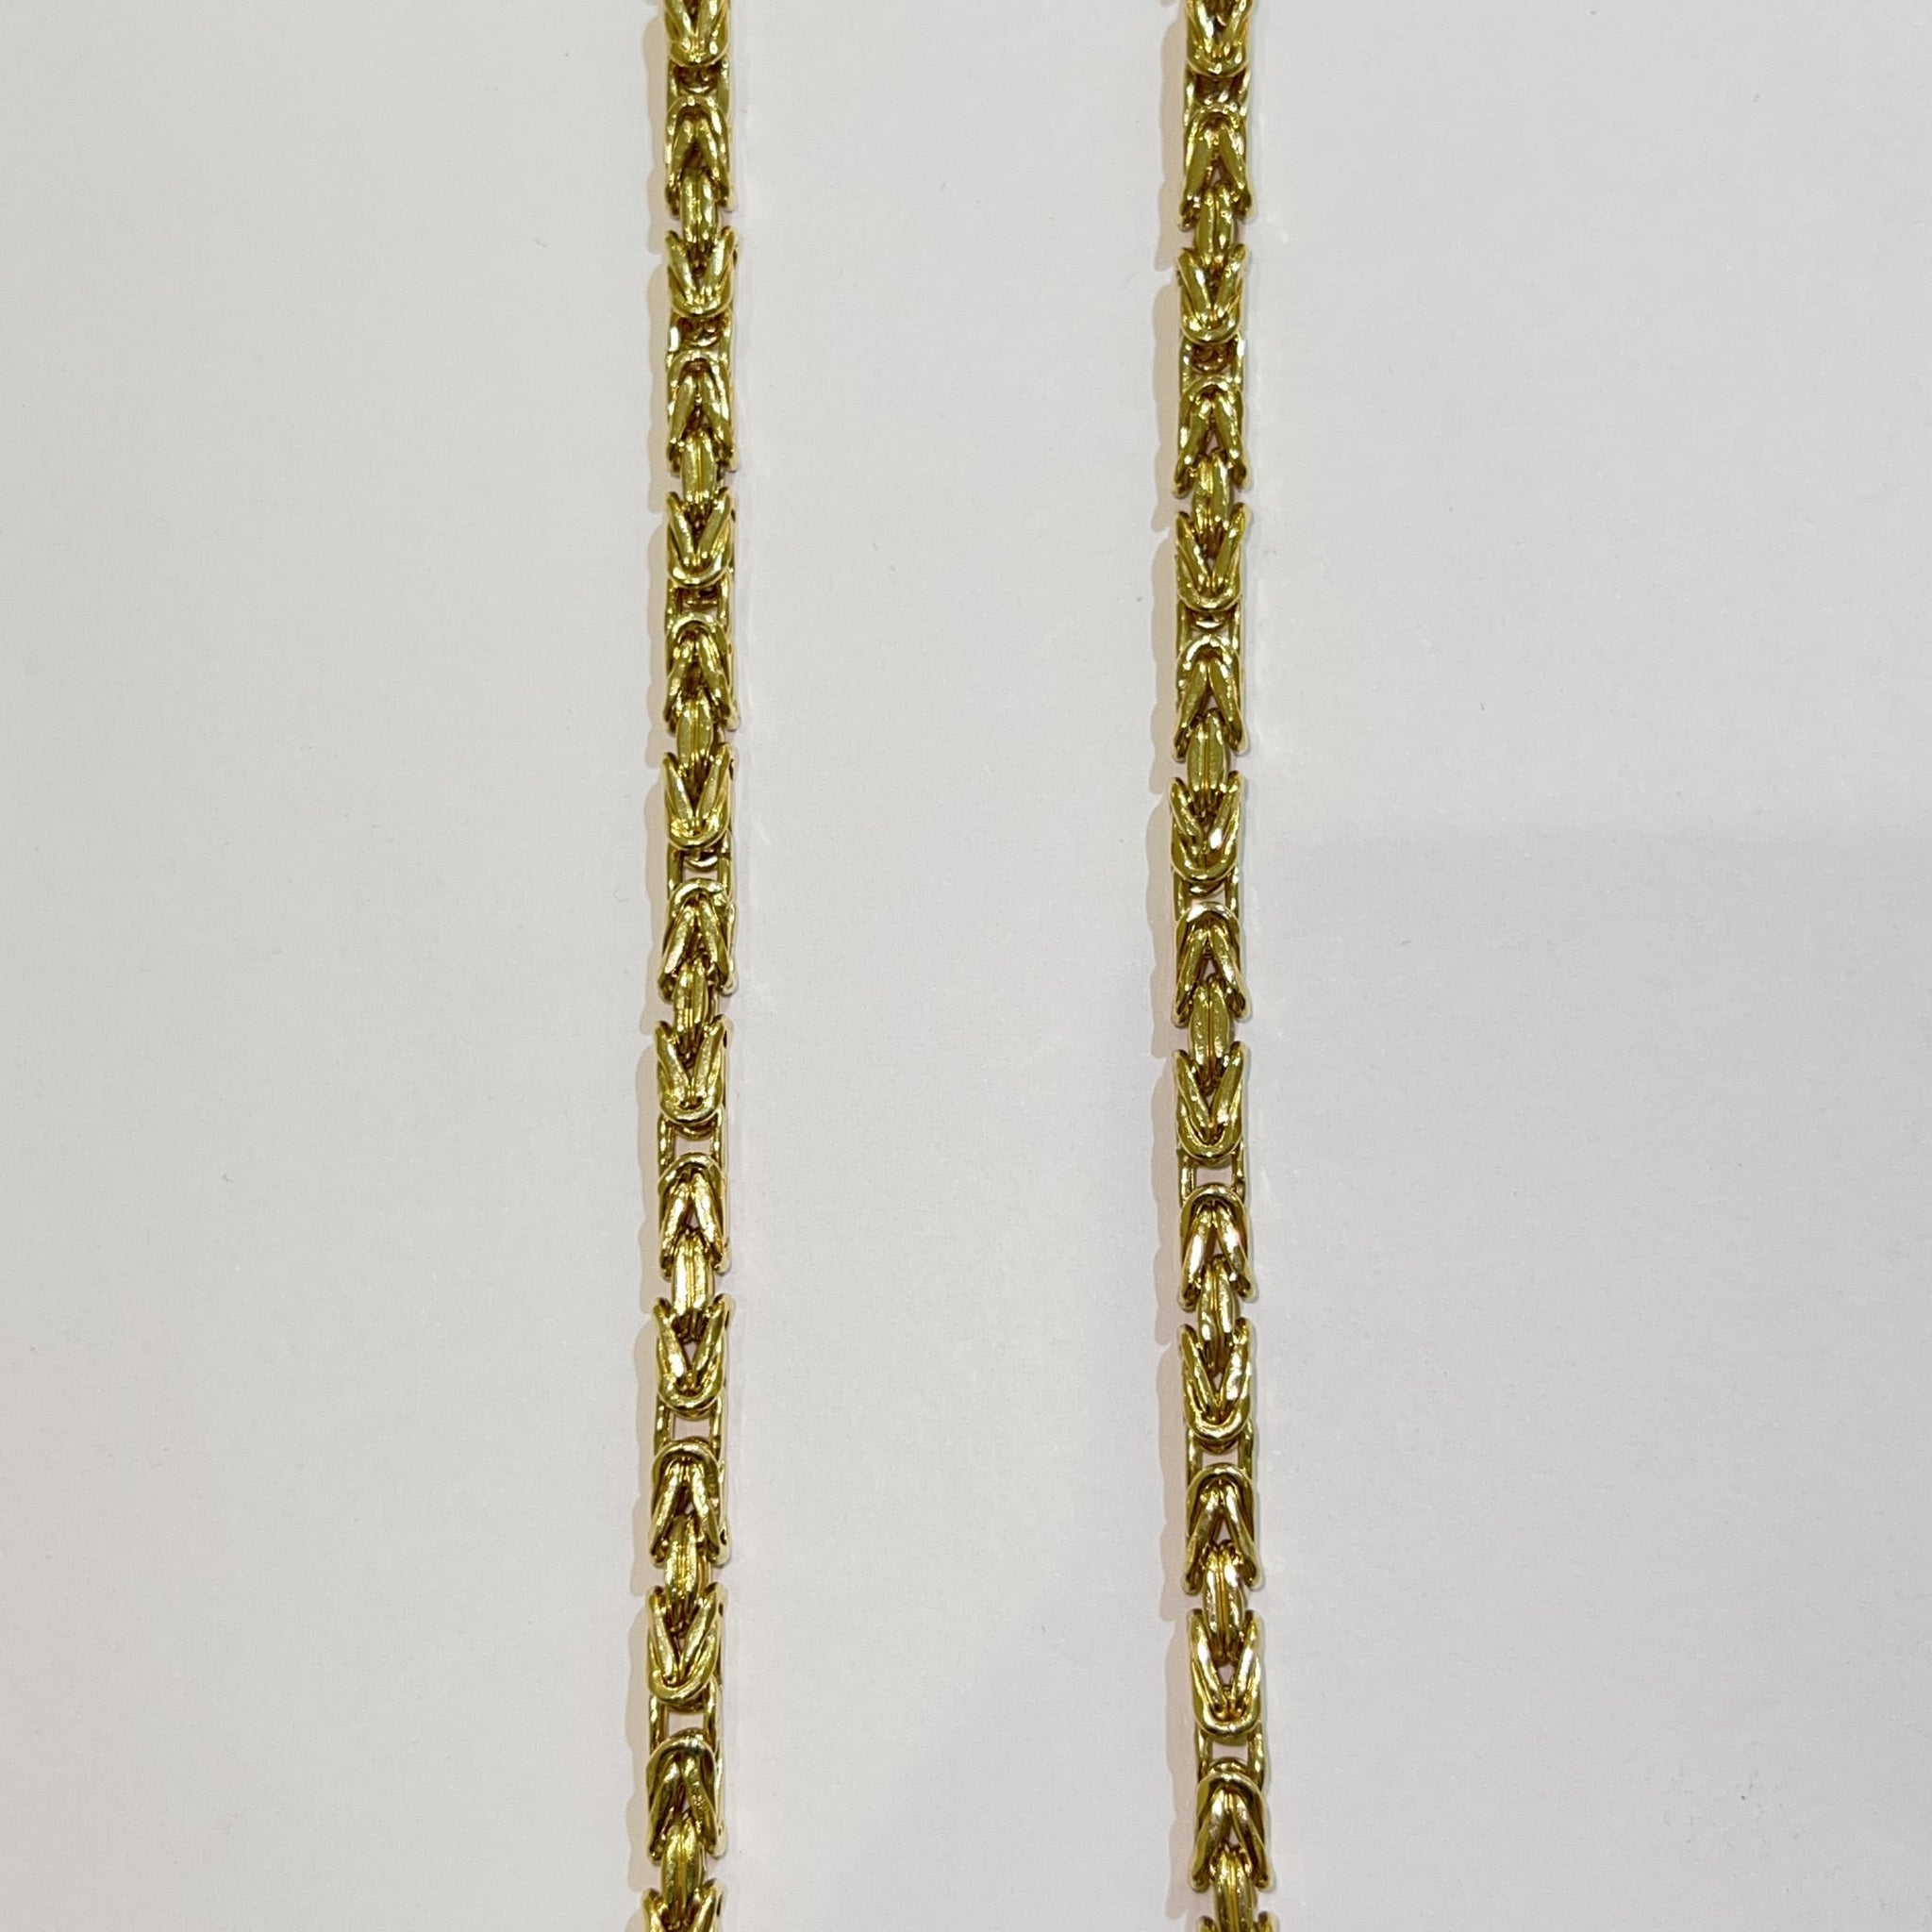 Kingschain / Koningsschakel - 14 carat gold - 4.5mm / 65cm